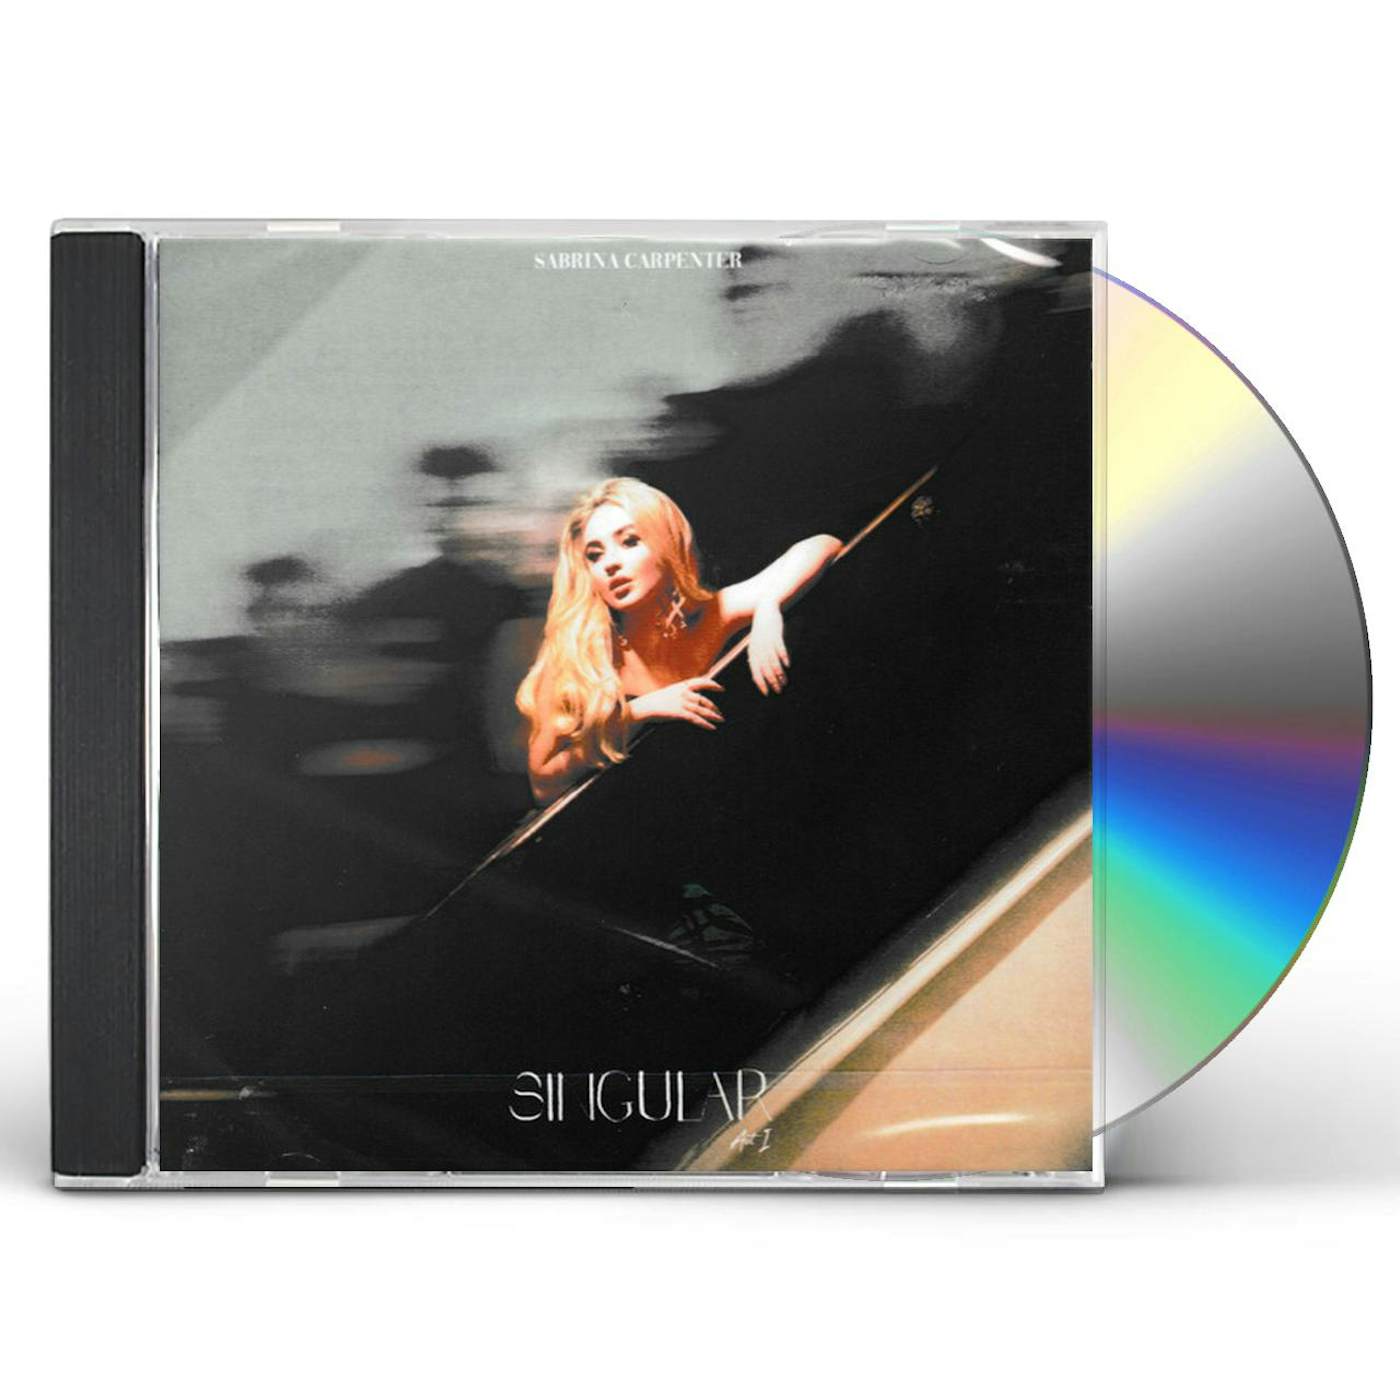 Sweetener de Ariana Grande, CD con kamchatka - Ref:119364441